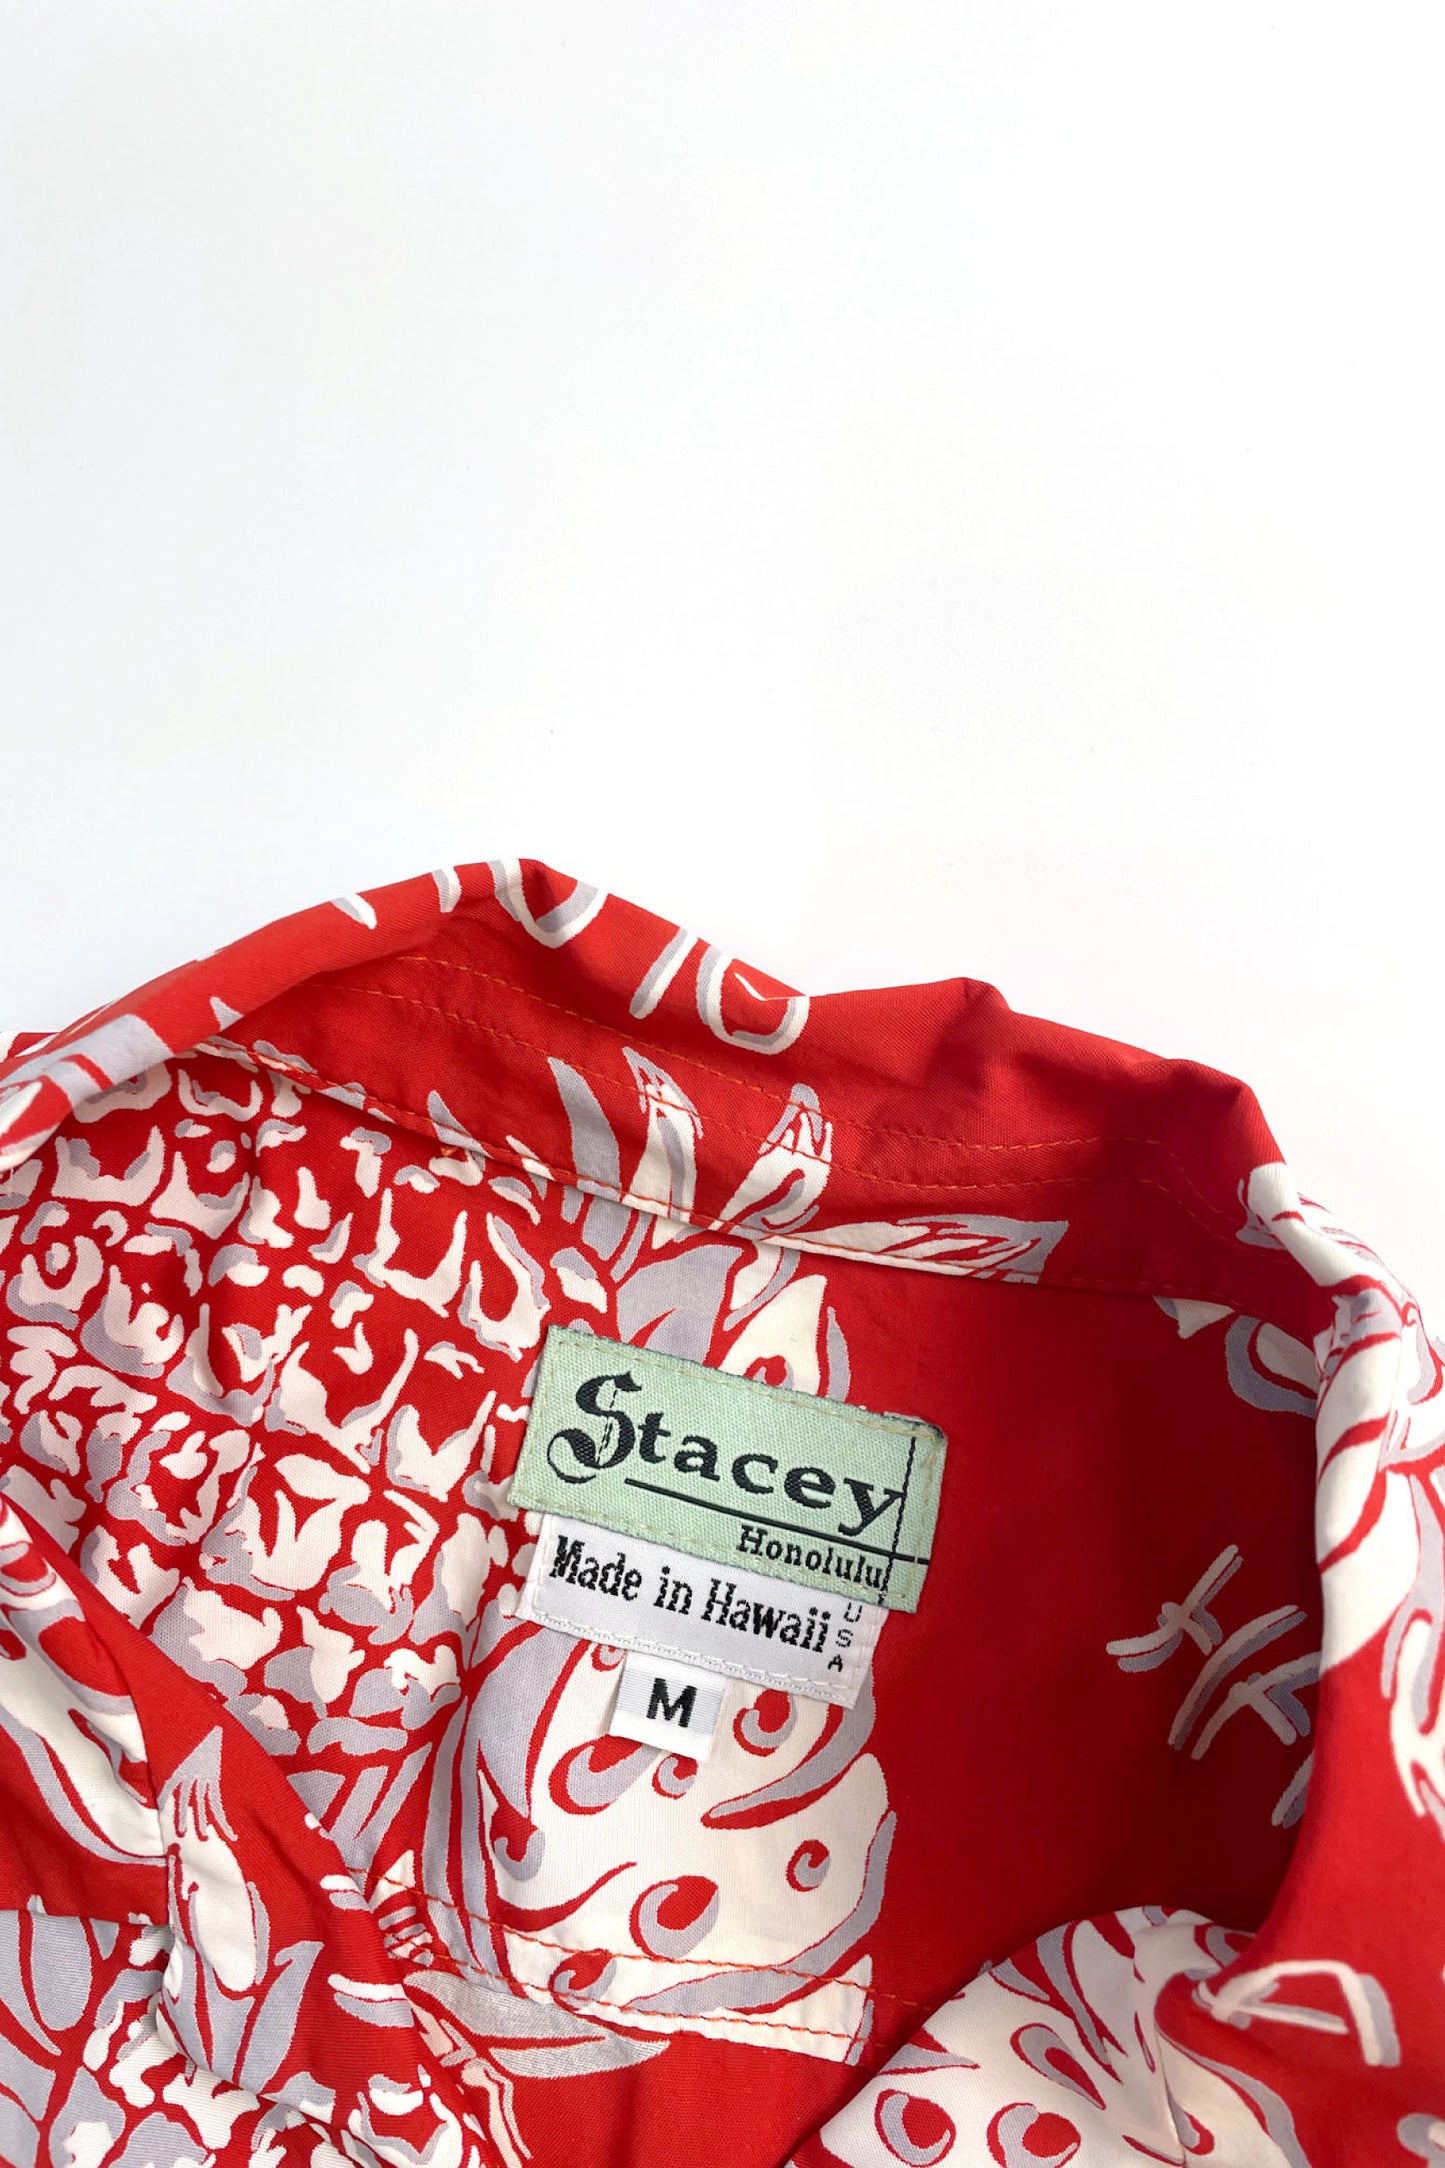 90's Made in USA Stacey rayon aloha shirt red